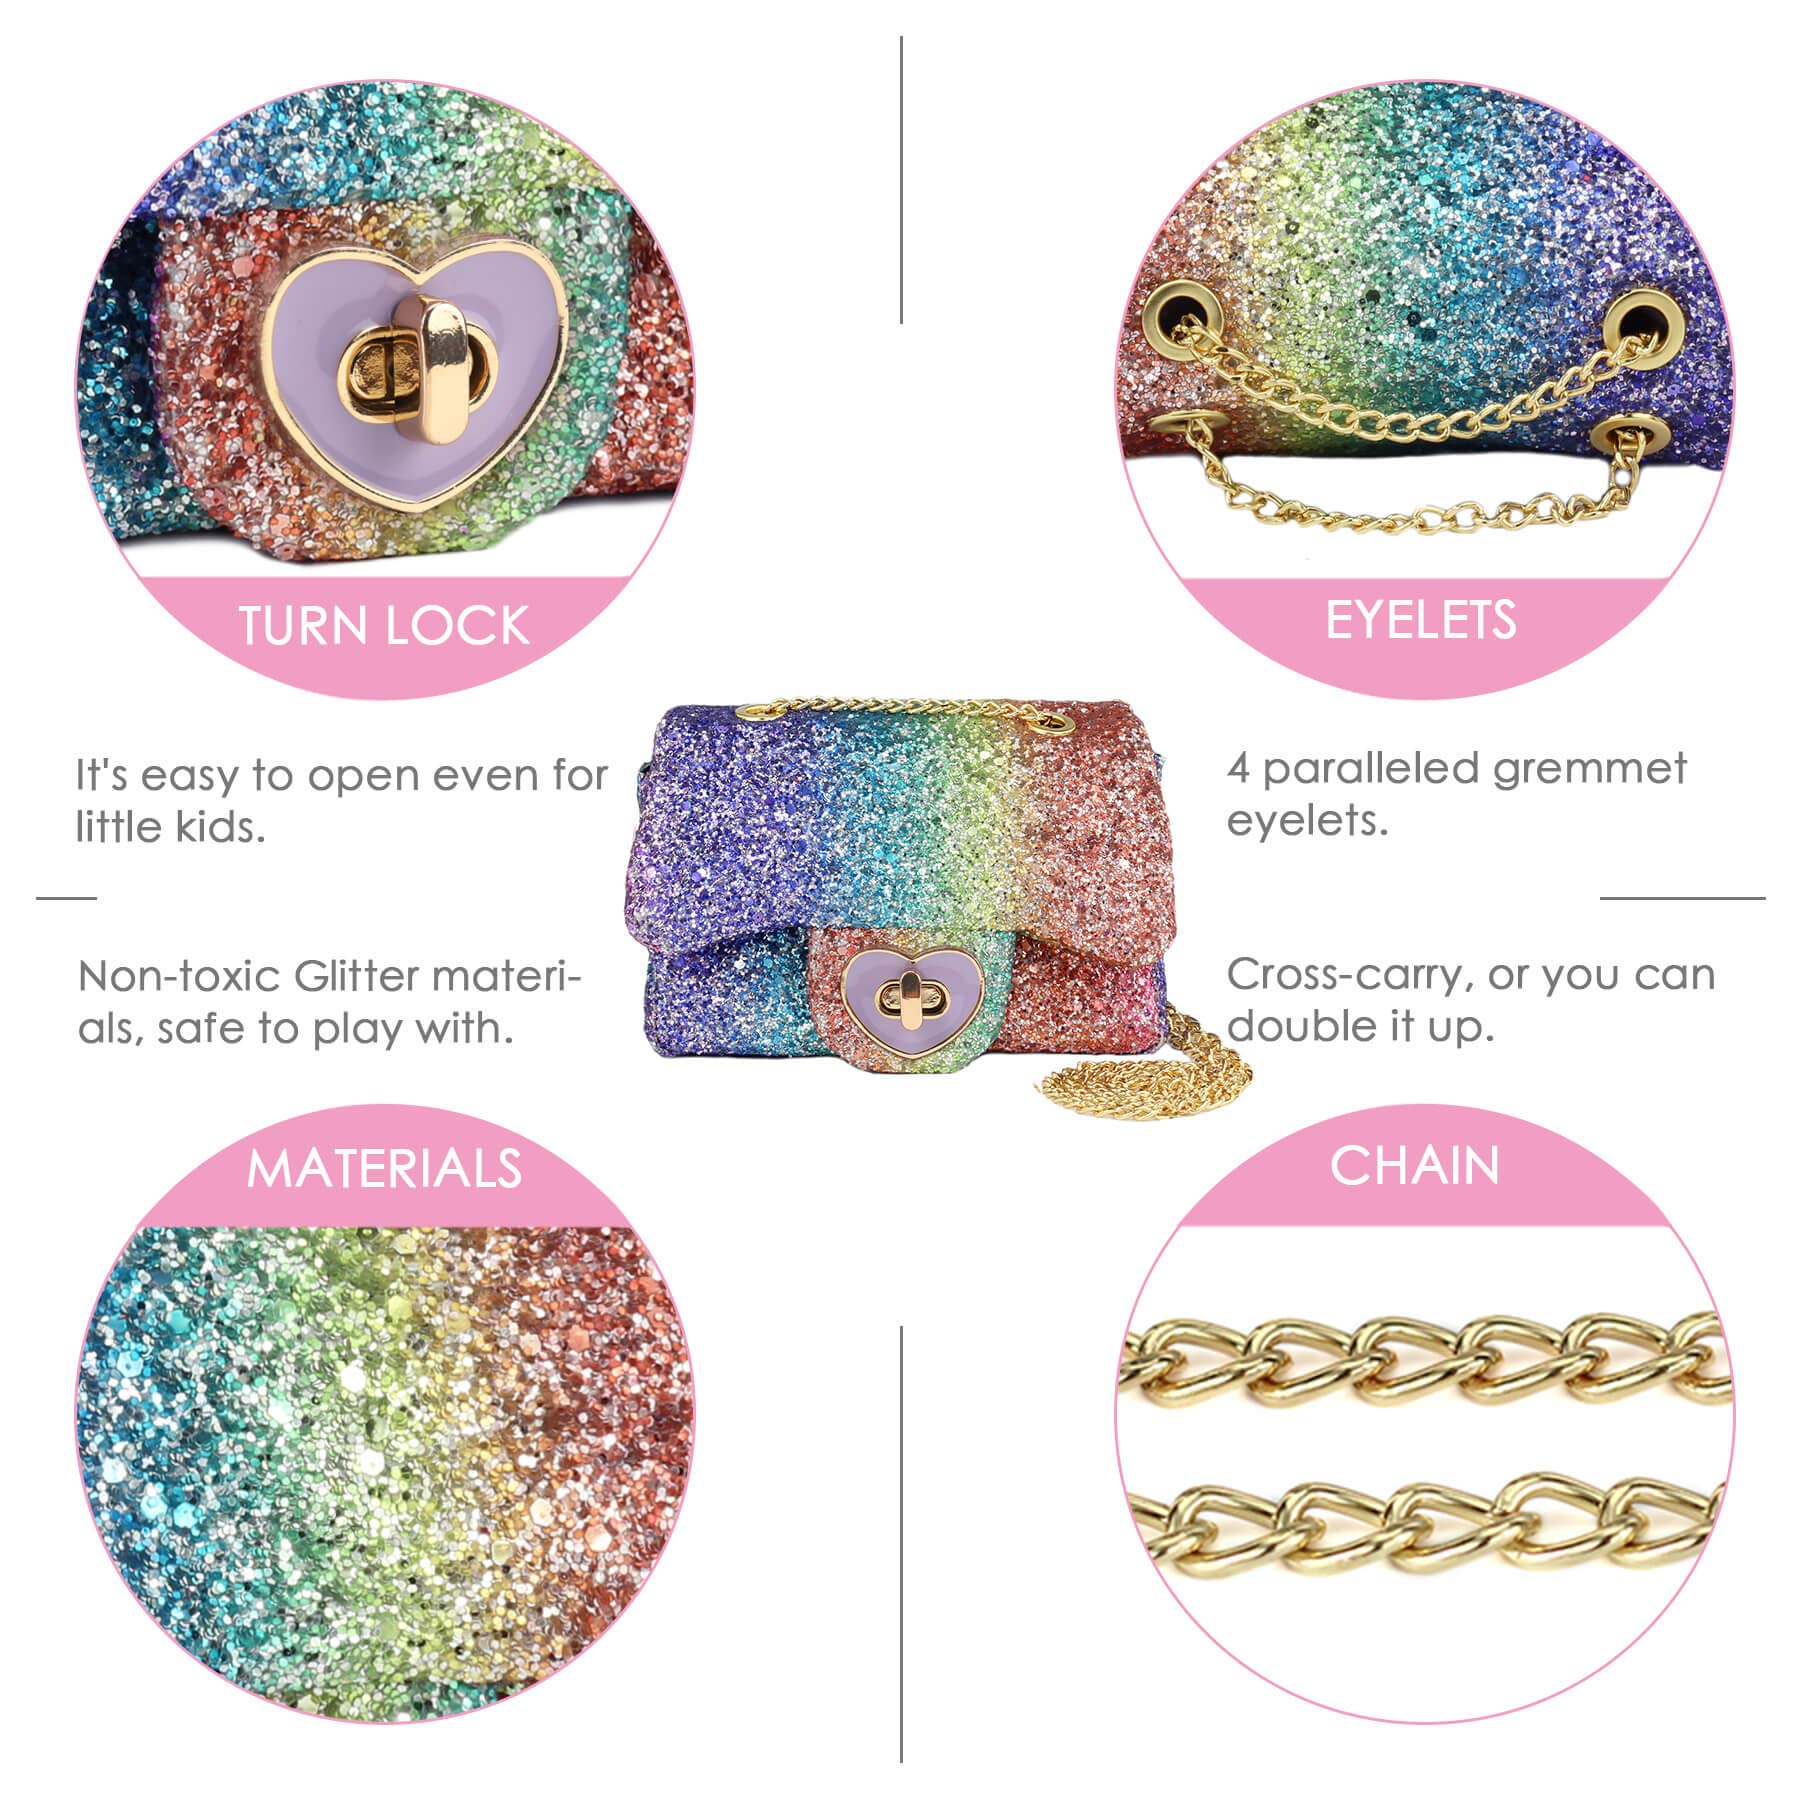 Rita-Glitter Mini Purse Crossbody Bag Mibasies 